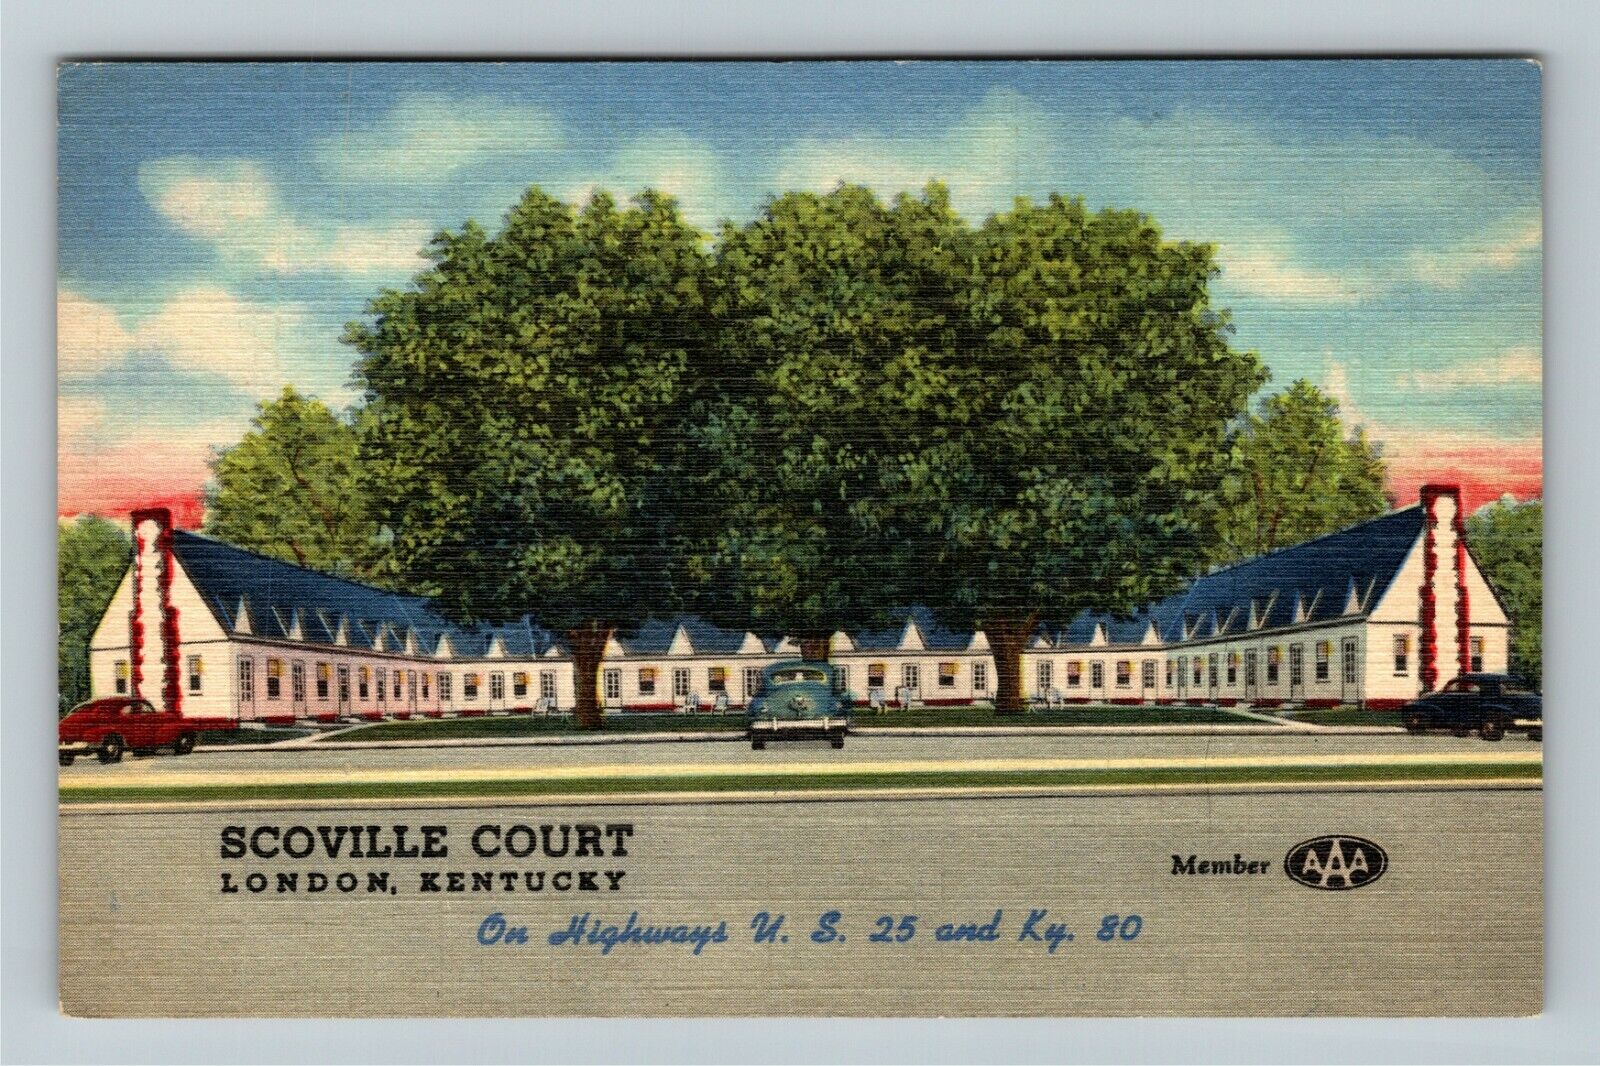 London, KY-Kentucky, Advertising Scoville Court Hotel, Vintage Postcard